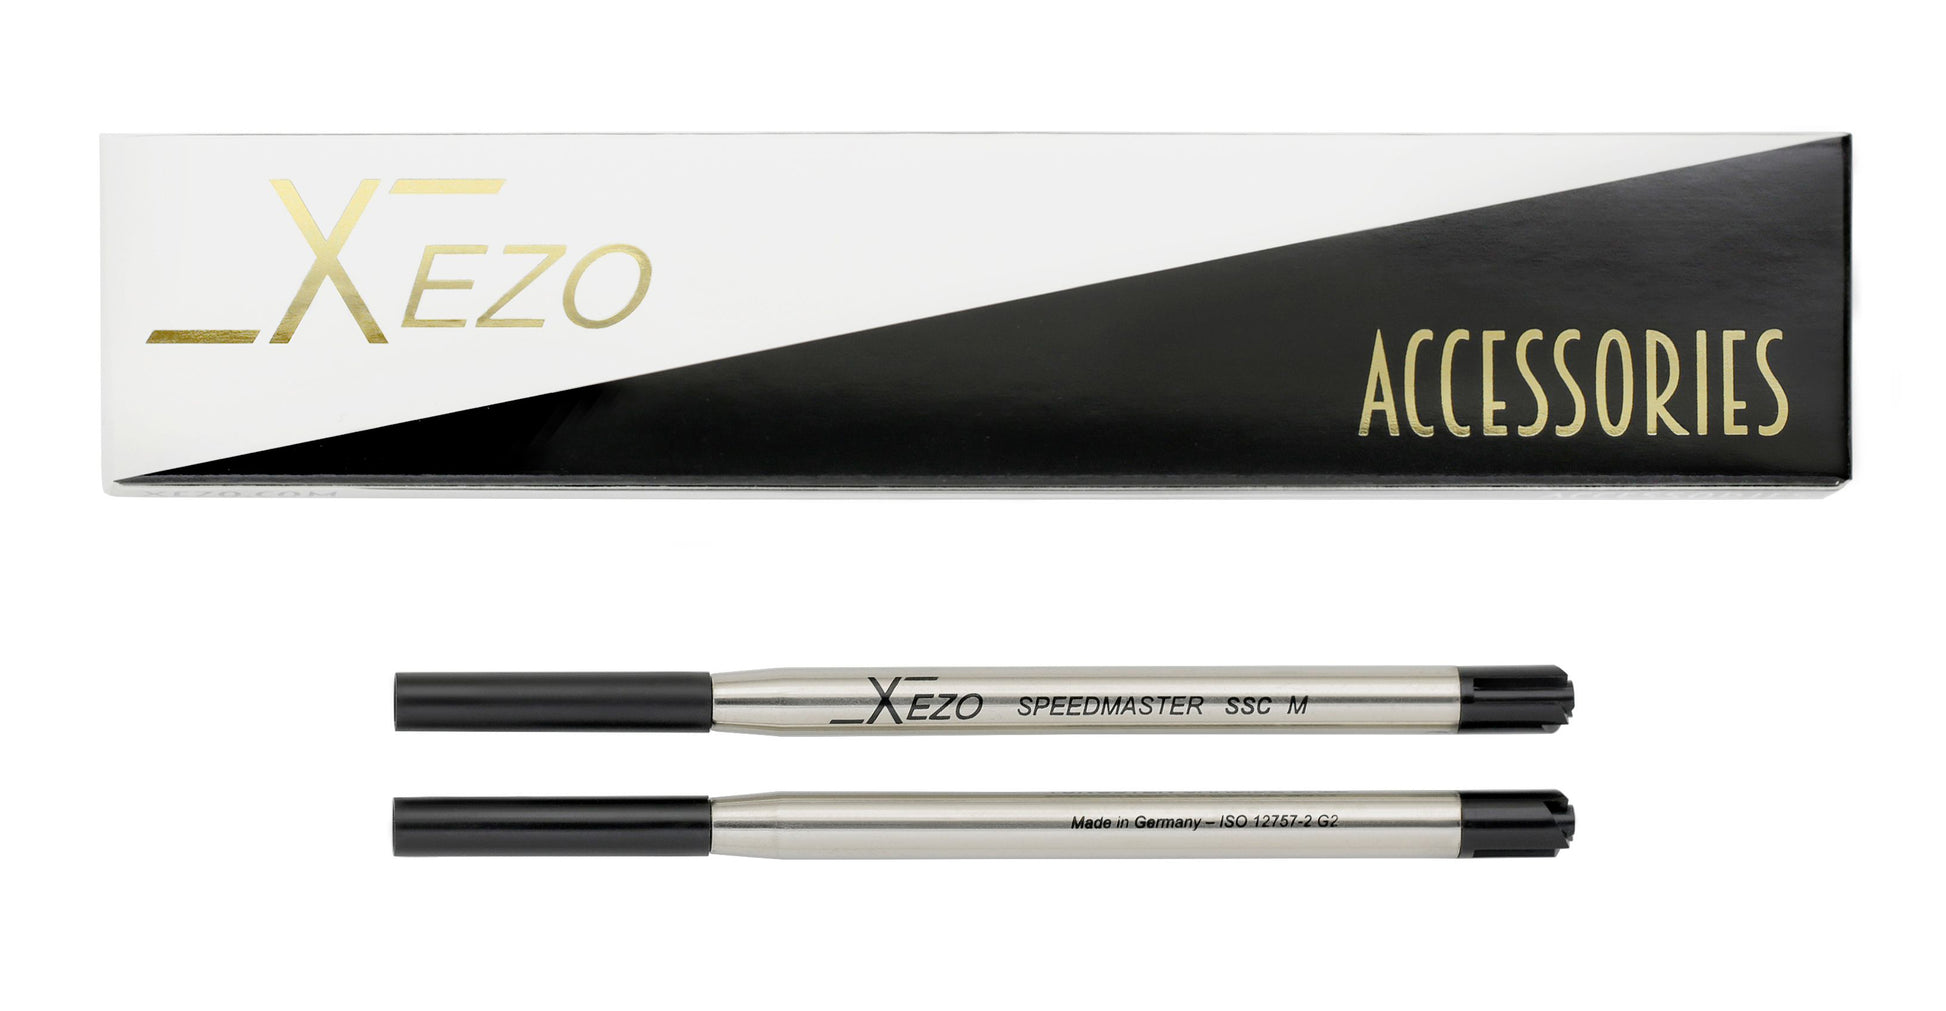 Xezo - Two black ballpoint ink cartridges and a Xezo ACCESSORIES box - Xezo Speedmaster Black SSC-M Ballpoint Refills